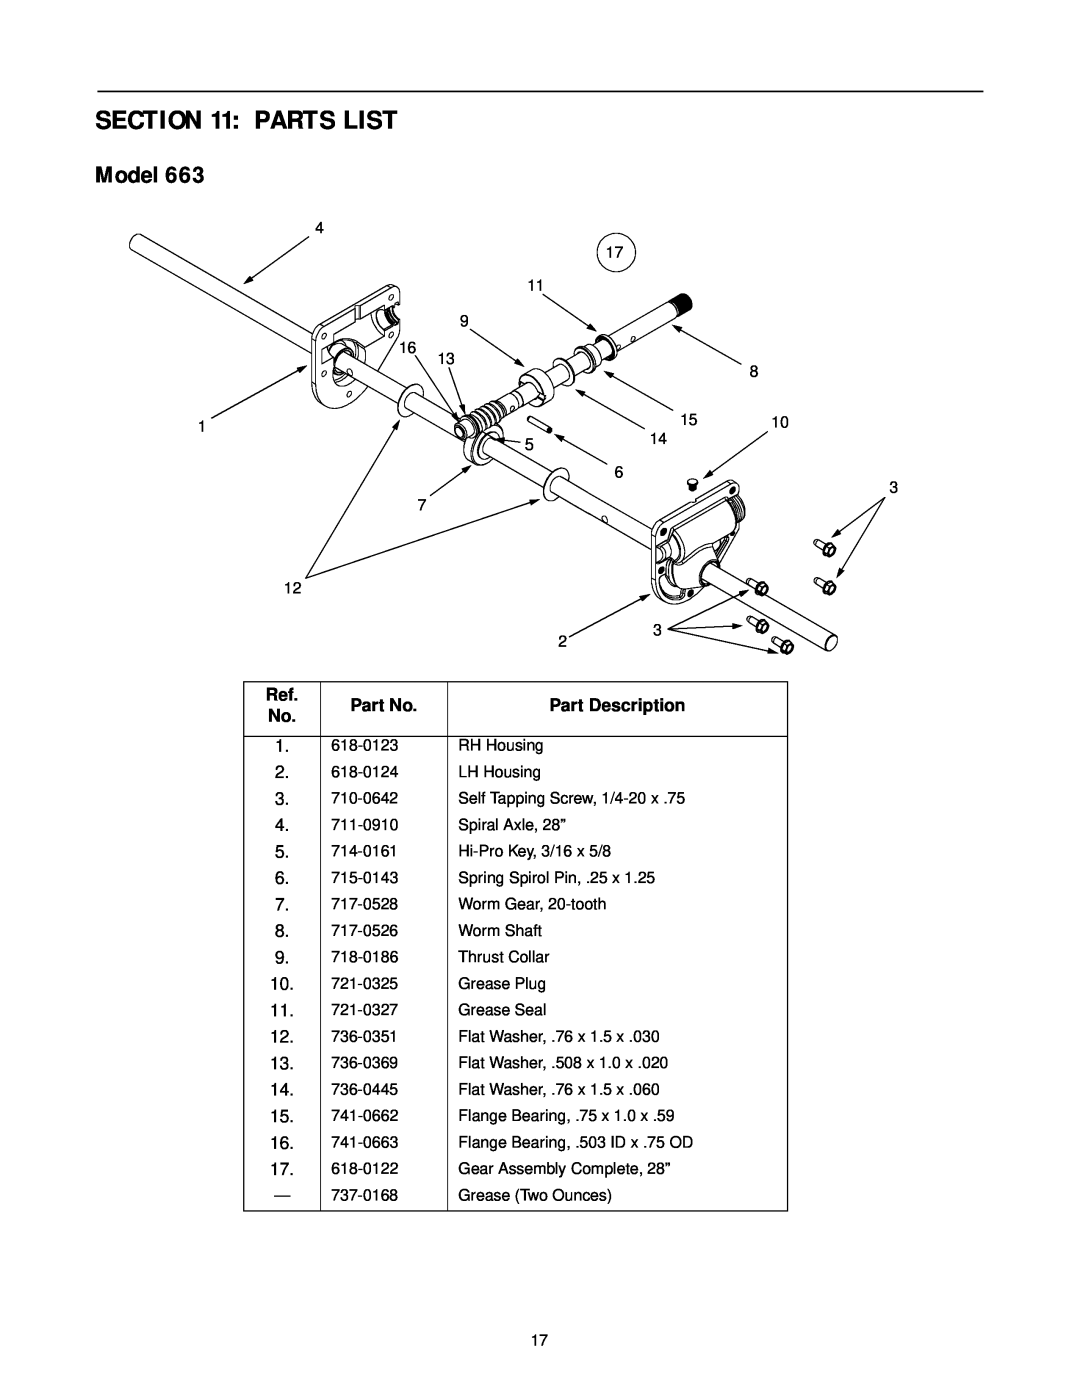 MTD E663G manual Parts List, Model, Part Description 